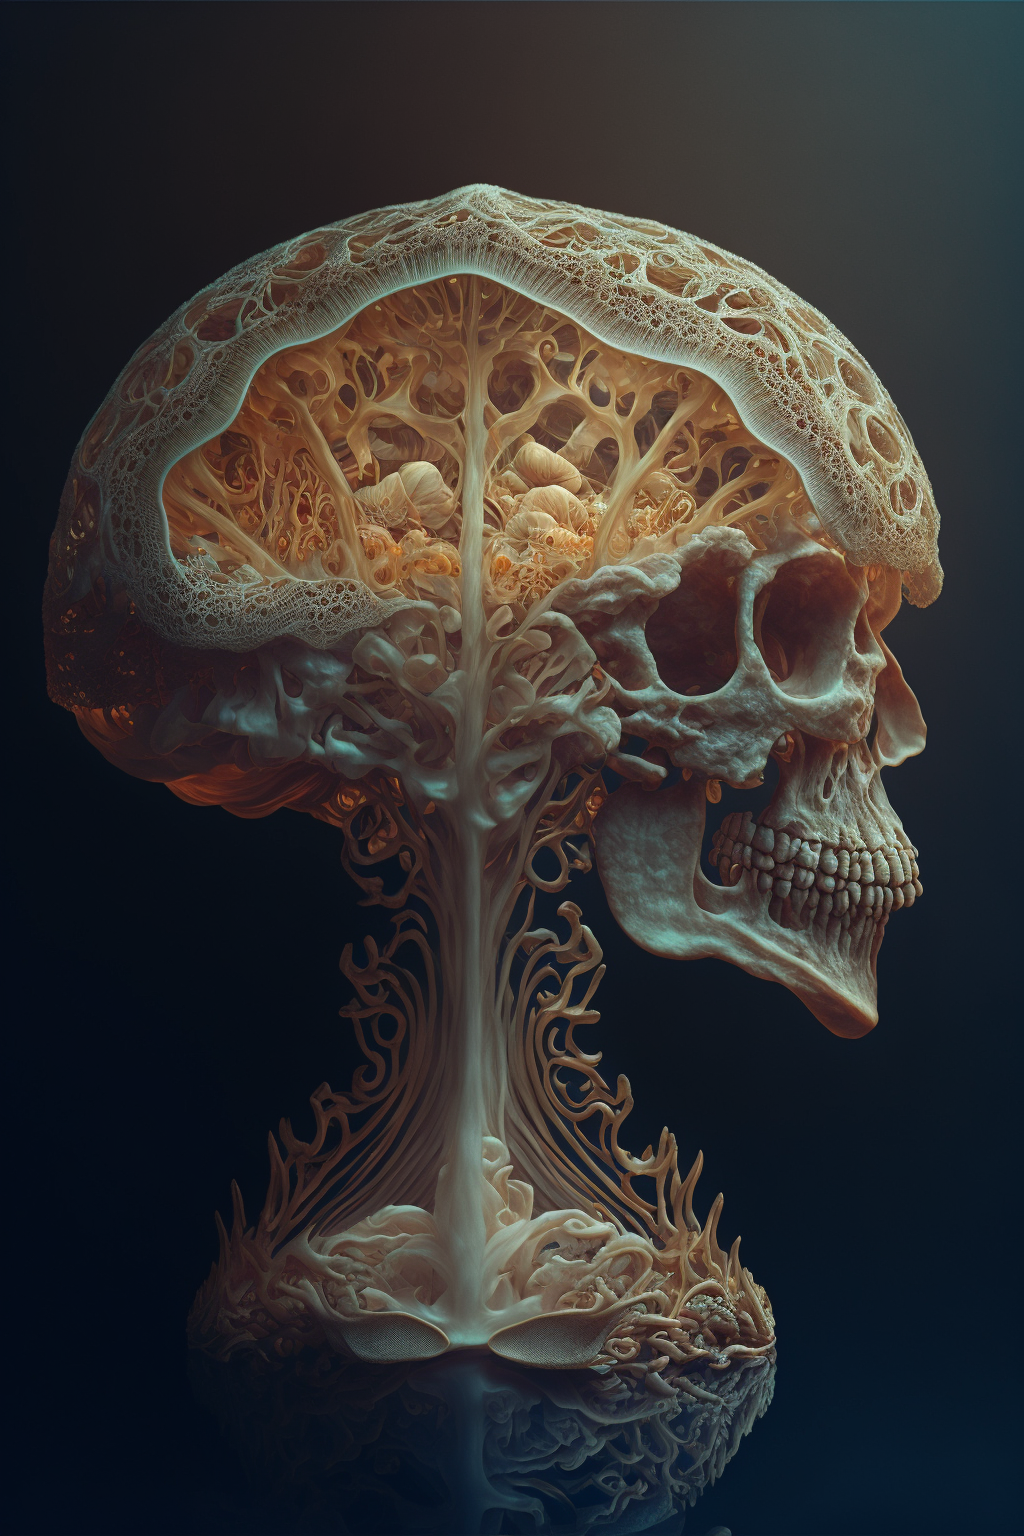 A man made of mushroom